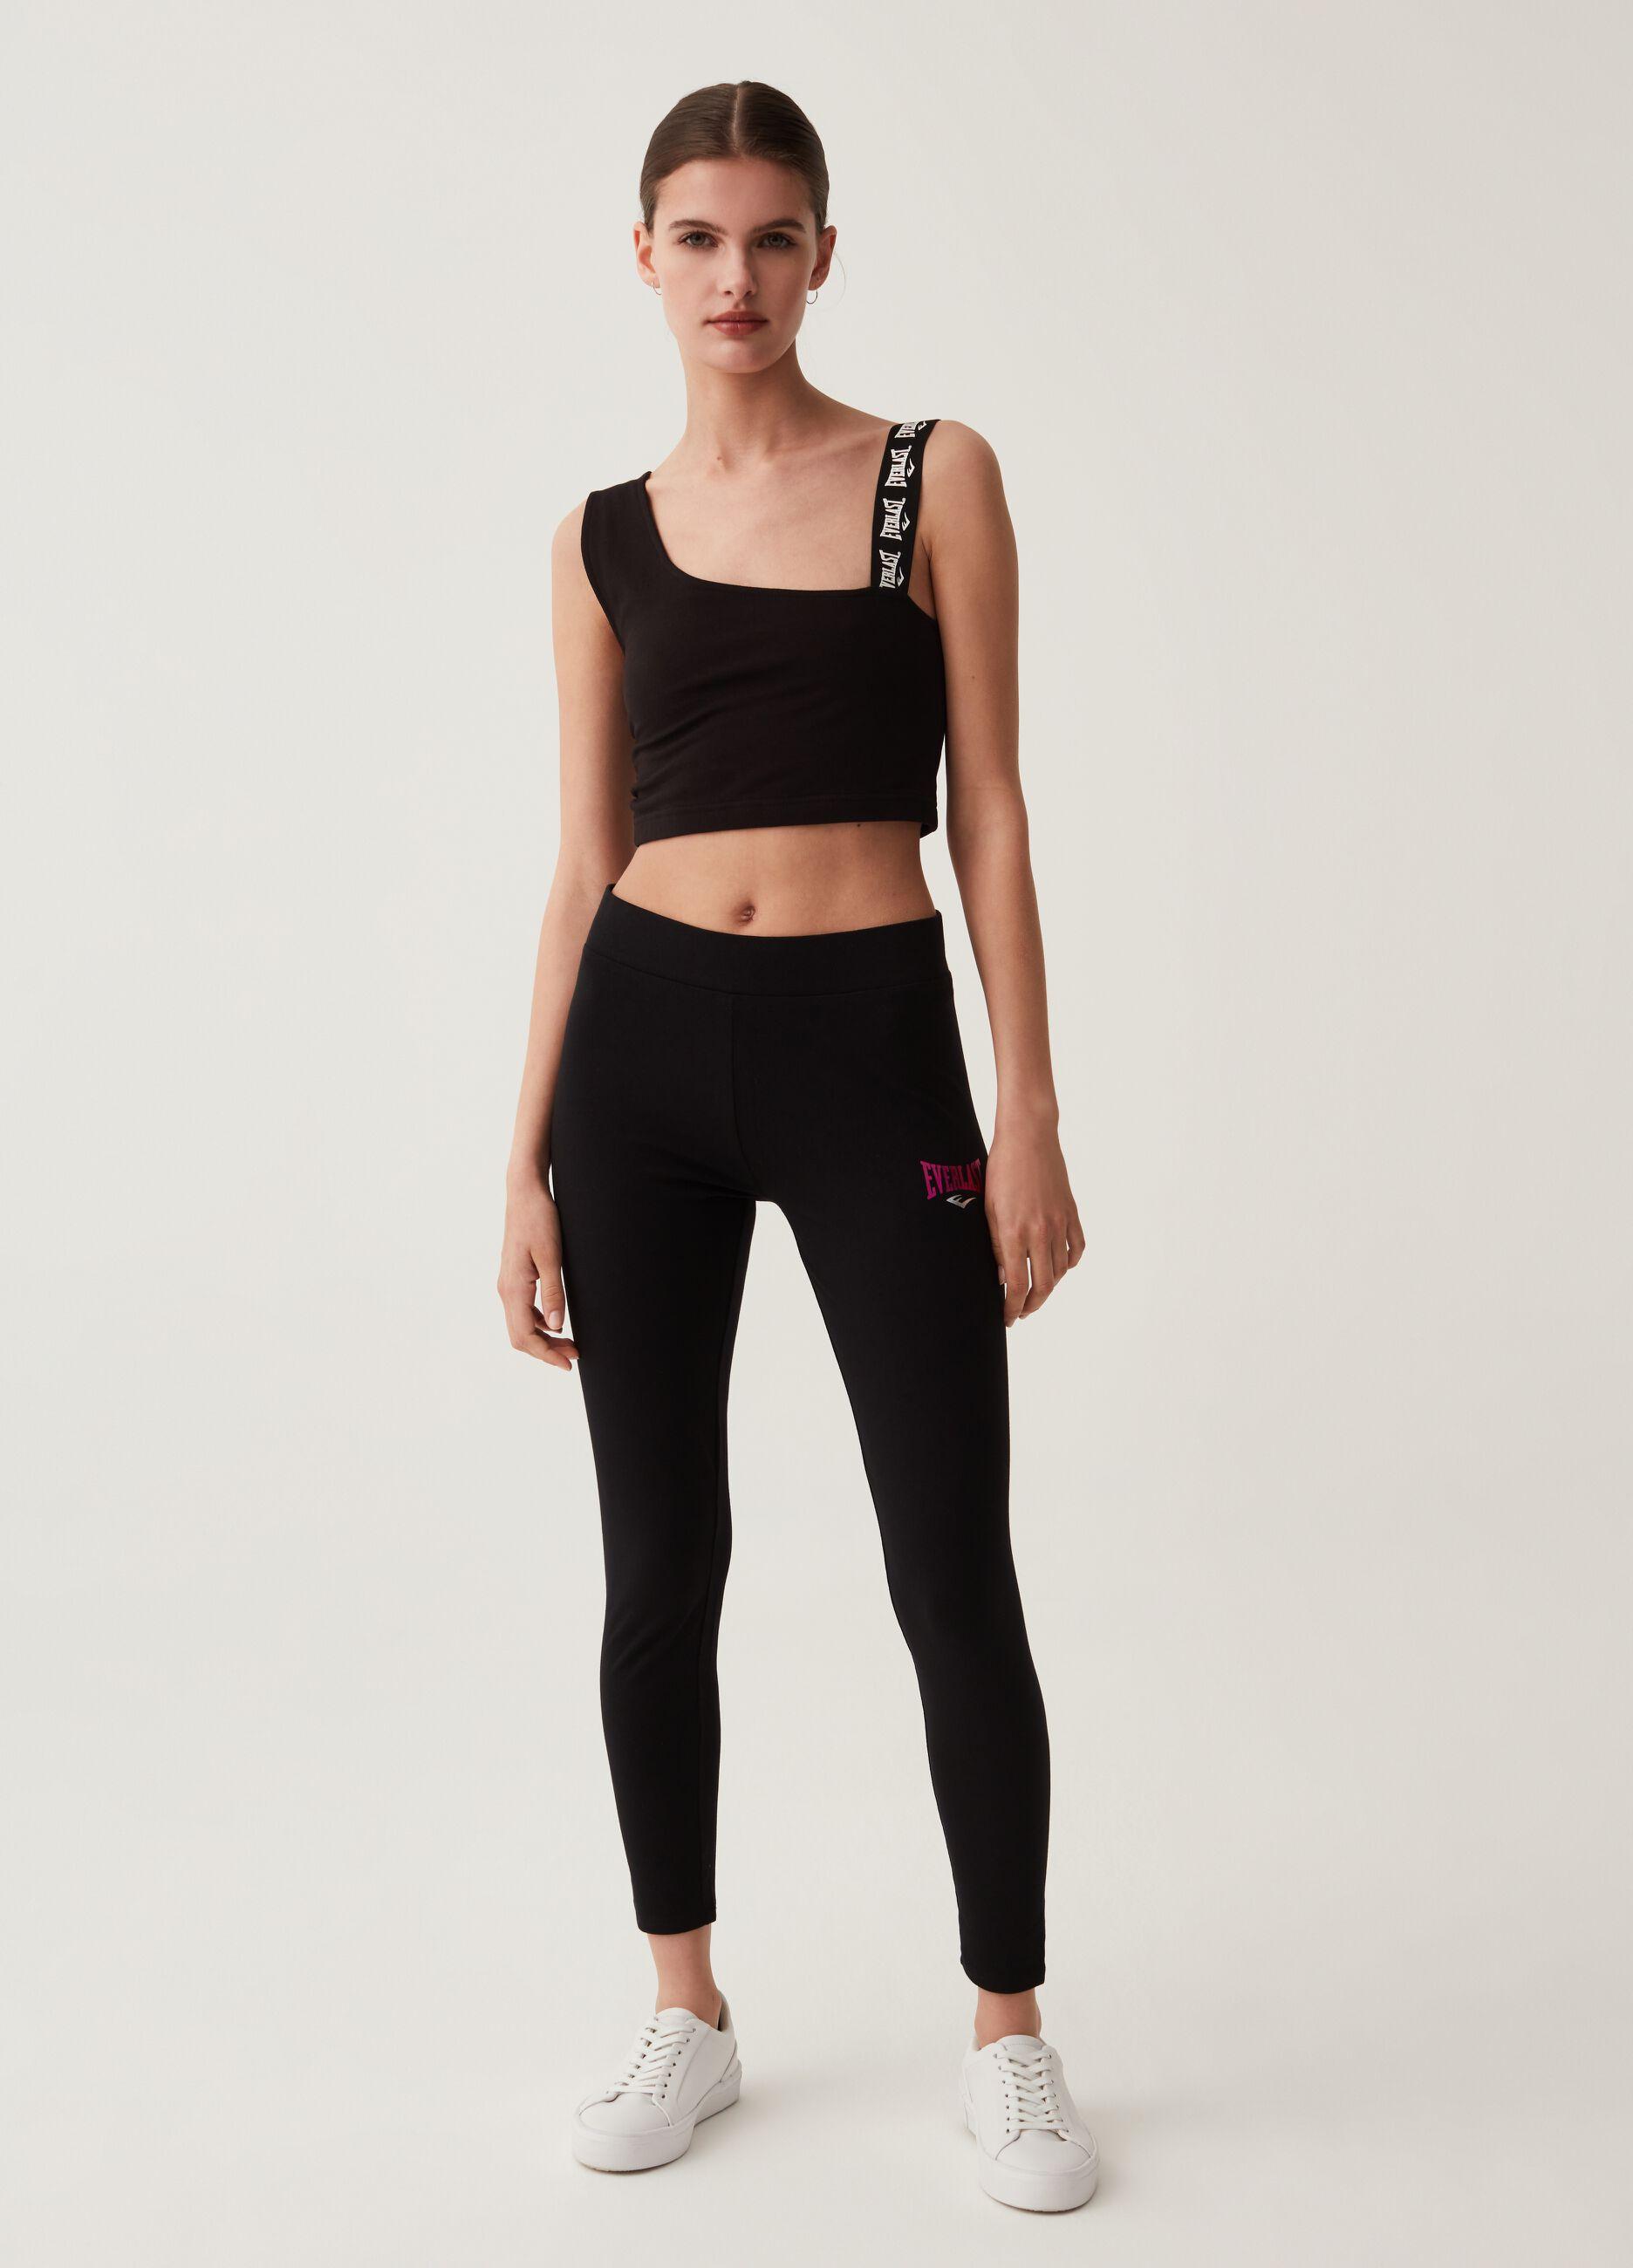 EVERLAST Woman's Black Stretch cotton leggings with Everlast print